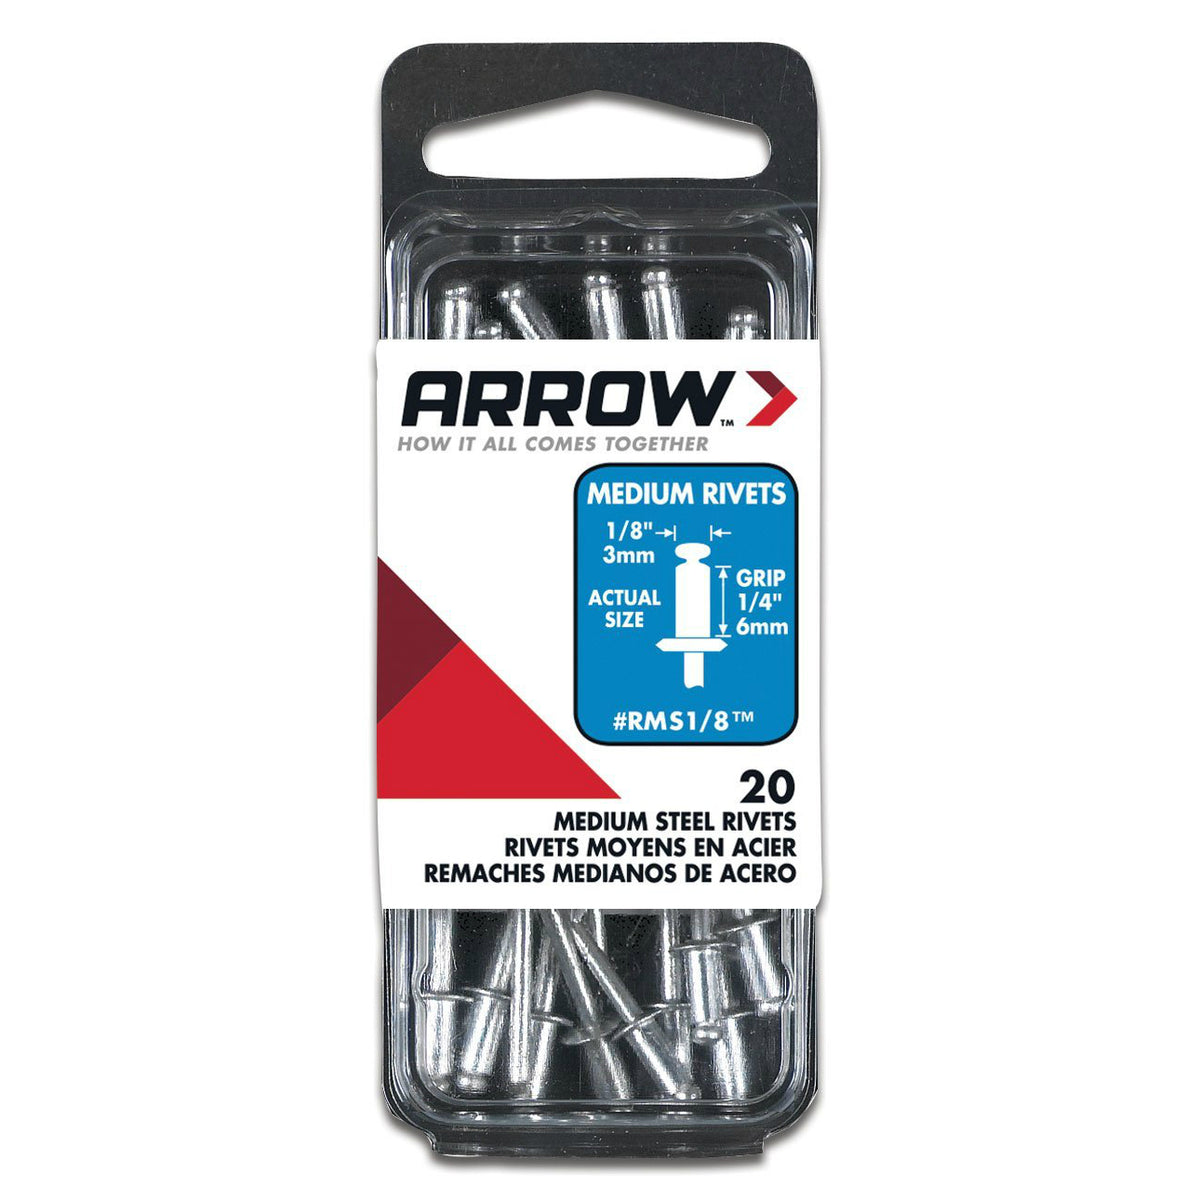 Arrow RMS1/8 Medium Steel Rivets, 1/8", 1/4" Length, 20 Piece